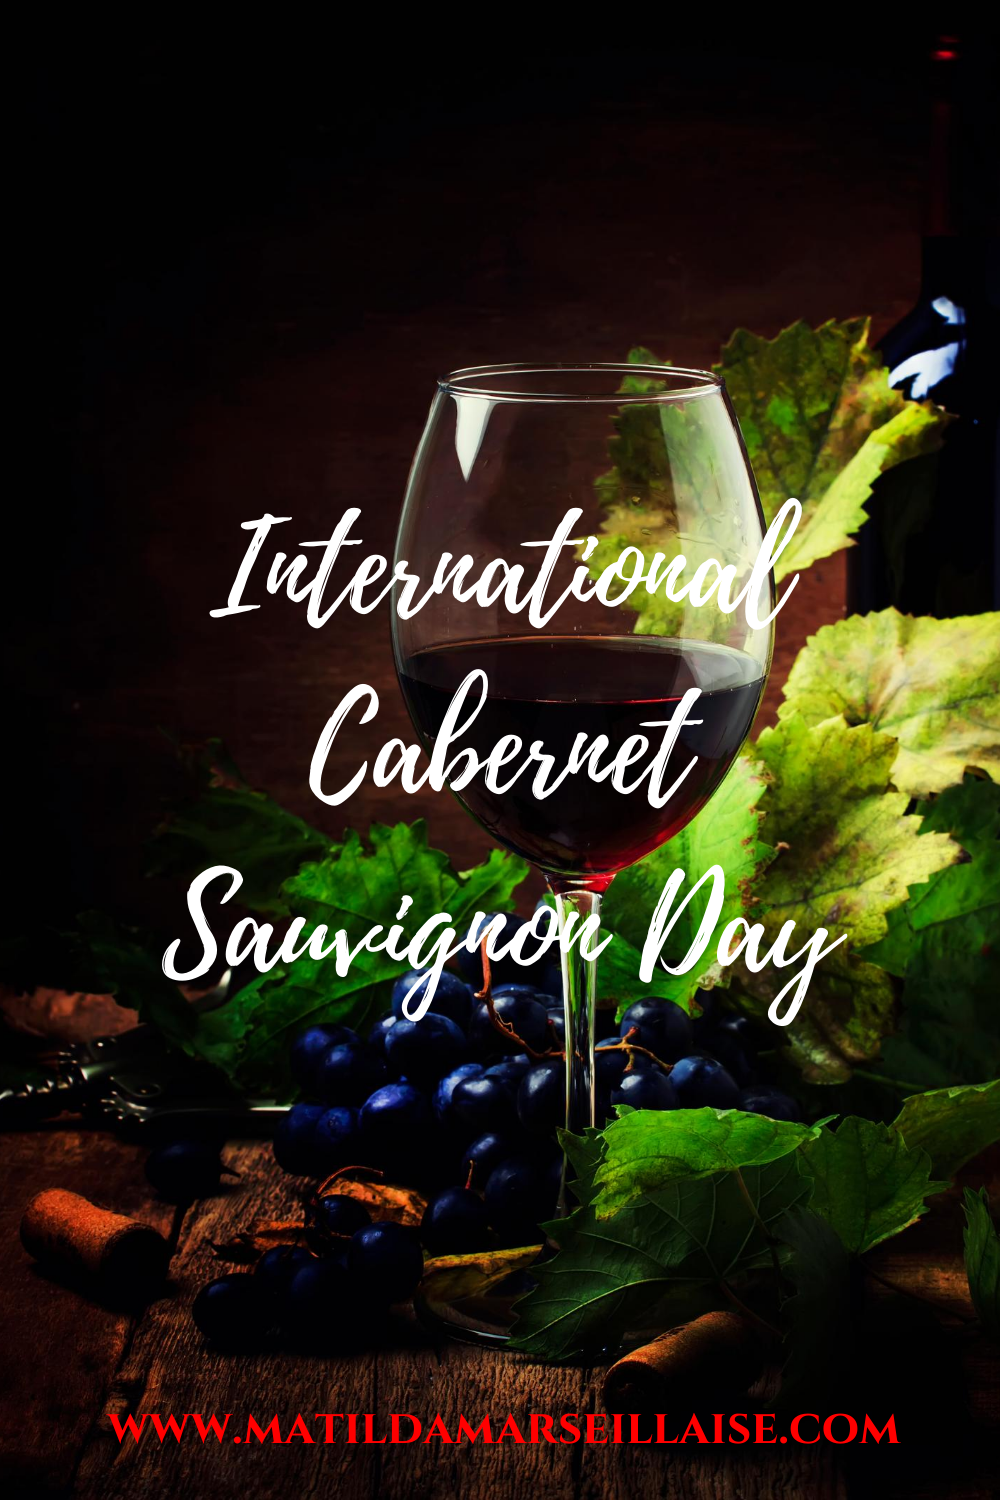 It’s International Sauvignon Day today! Matilda Marseillaise